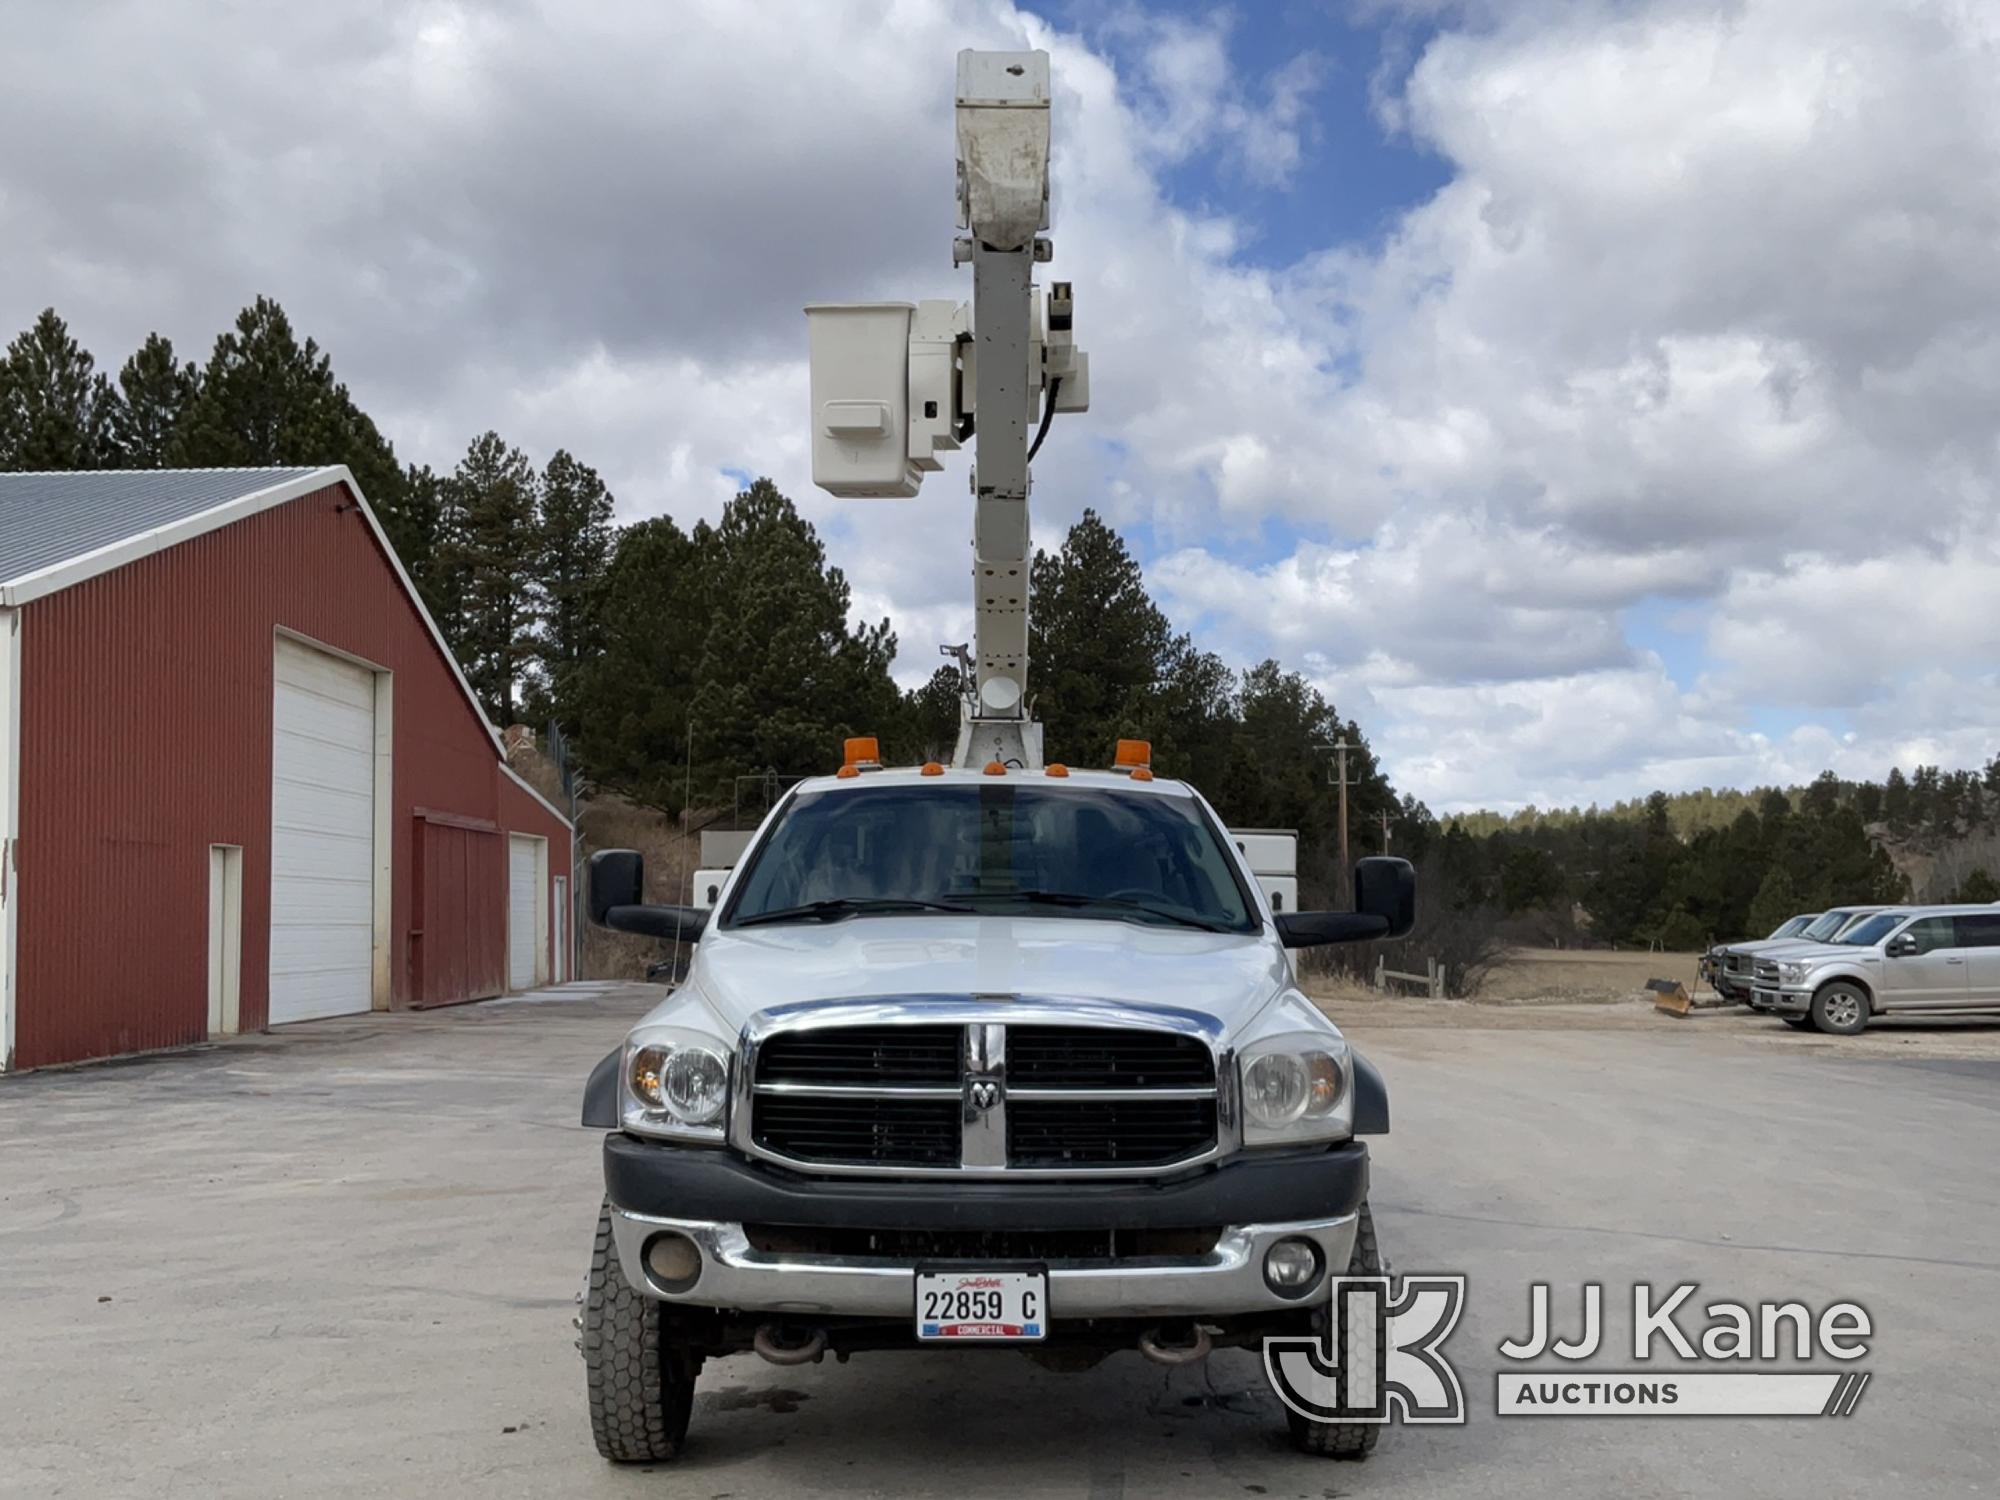 (Custer, SD) HiRanger HR37-MH, Material Handling Bucket Truck center mounted on 2008 Dodge Ram 5500